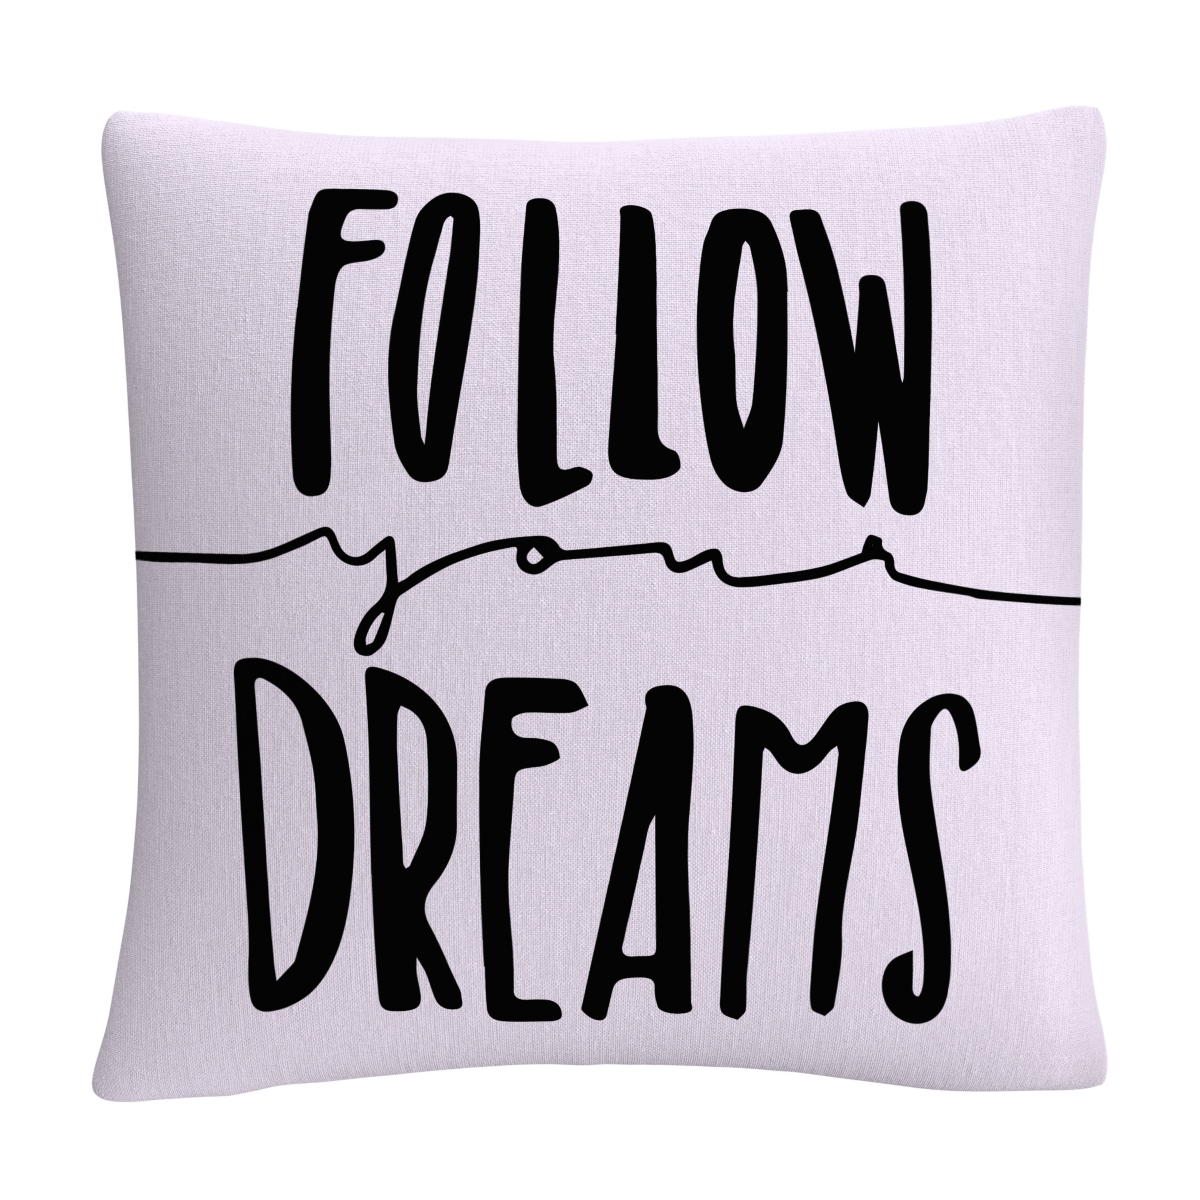 Abc Typographic Follow Your Dreams Decorative Pillow, 16 x 16